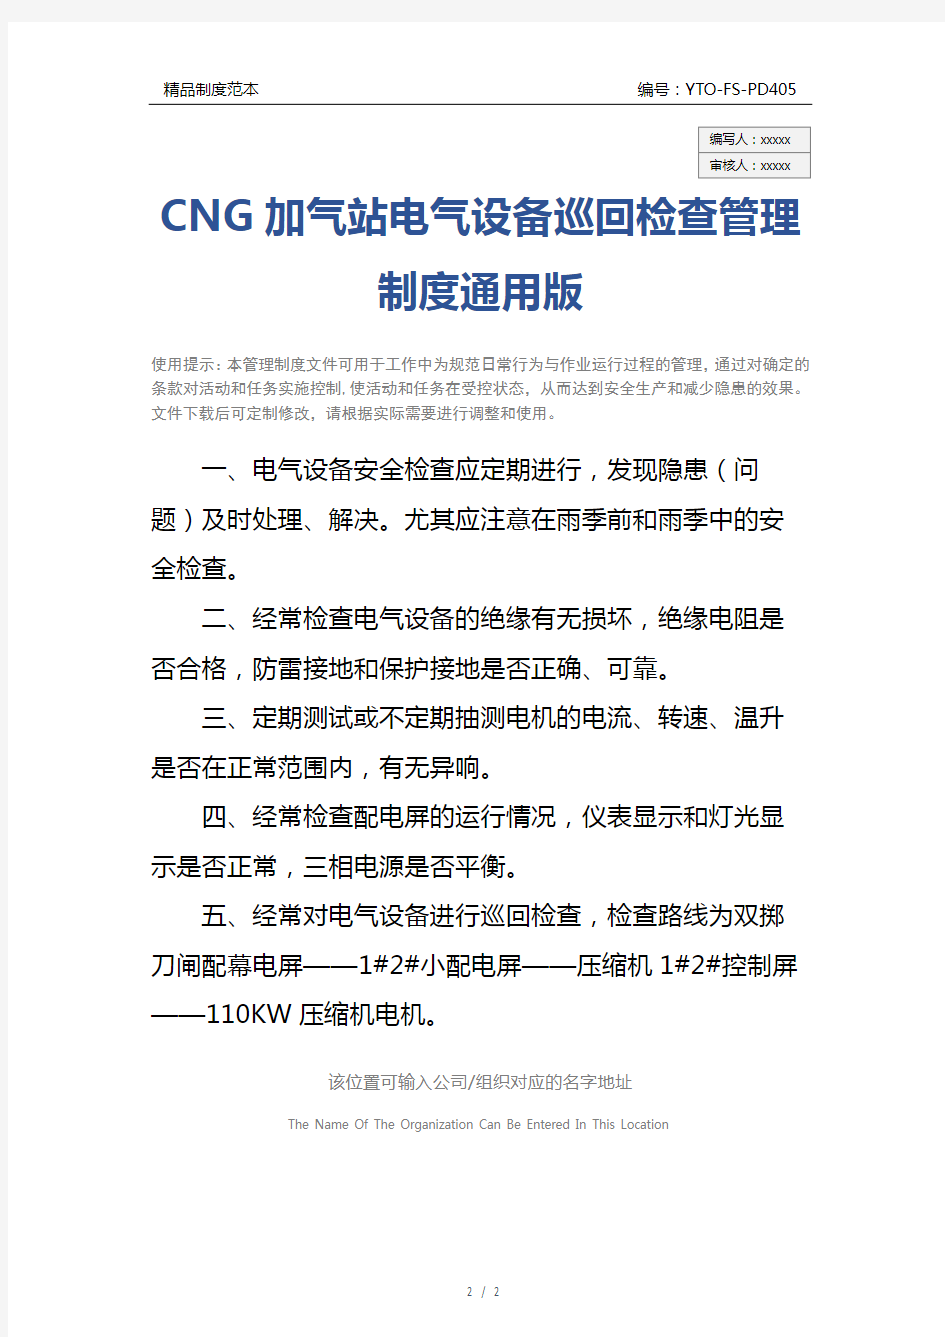 CNG加气站电气设备巡回检查管理制度通用版